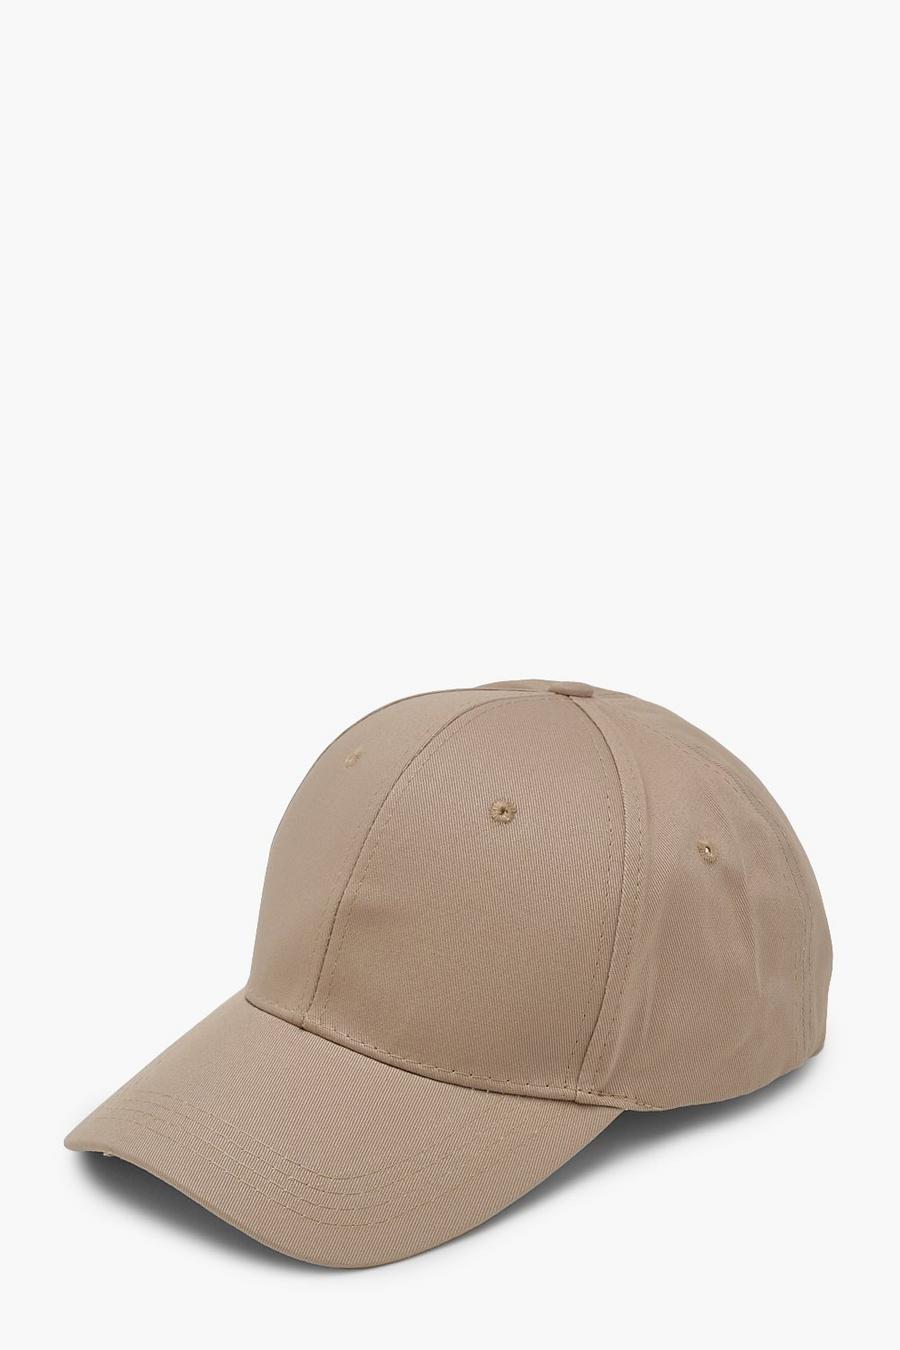 Brown Denim Cowboy Hat With Pearl Detail Brim